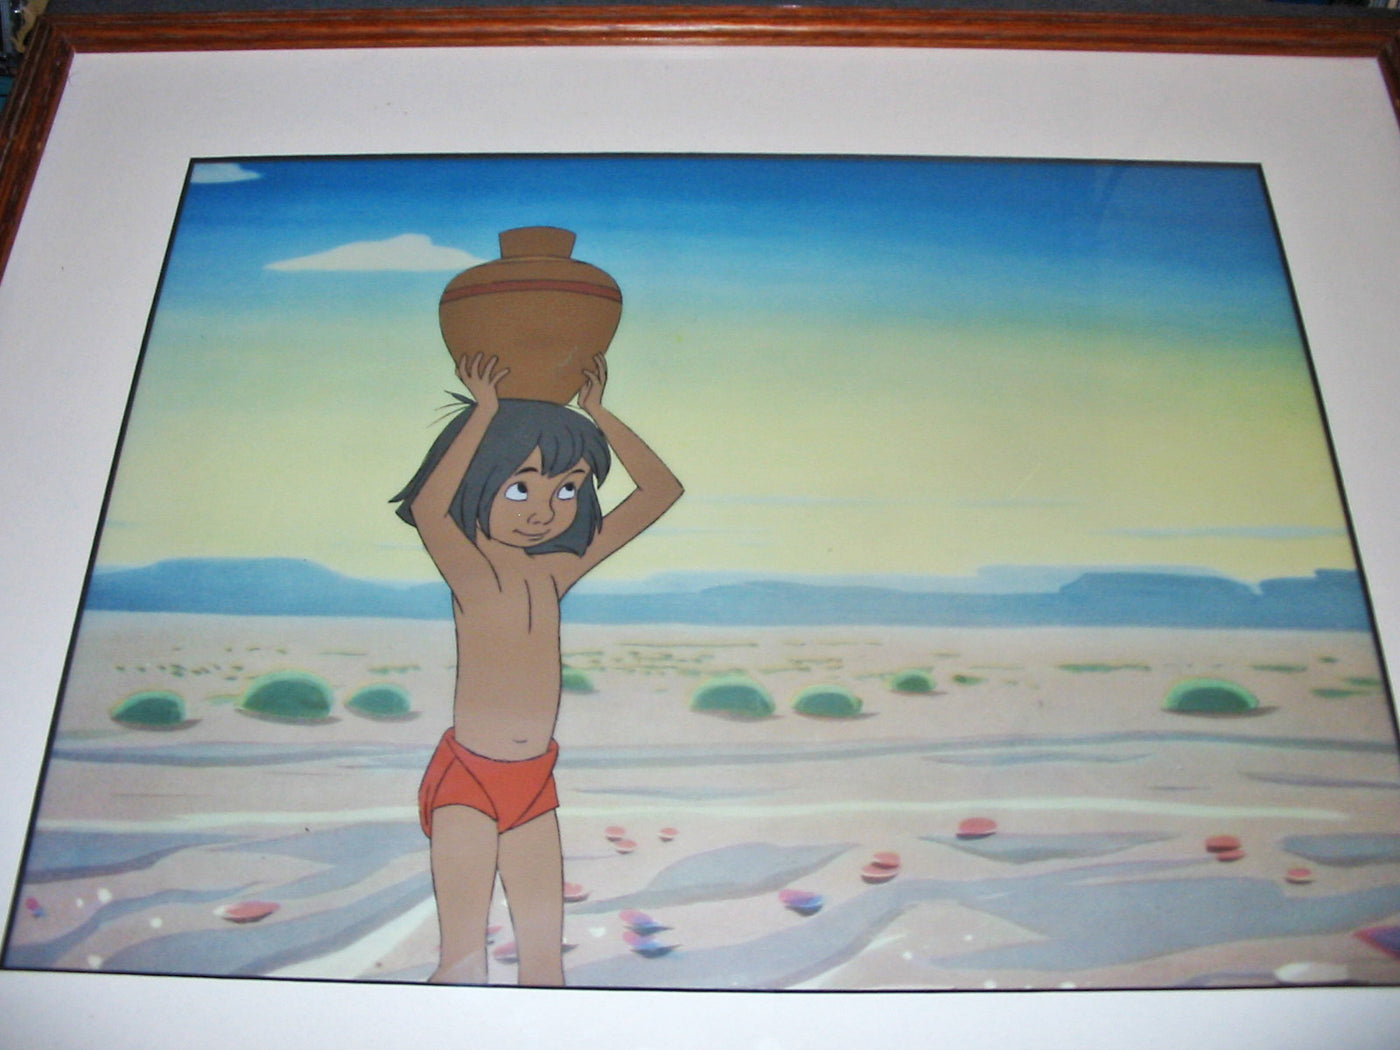 Disney Animation Production Cel featuring Mowgli